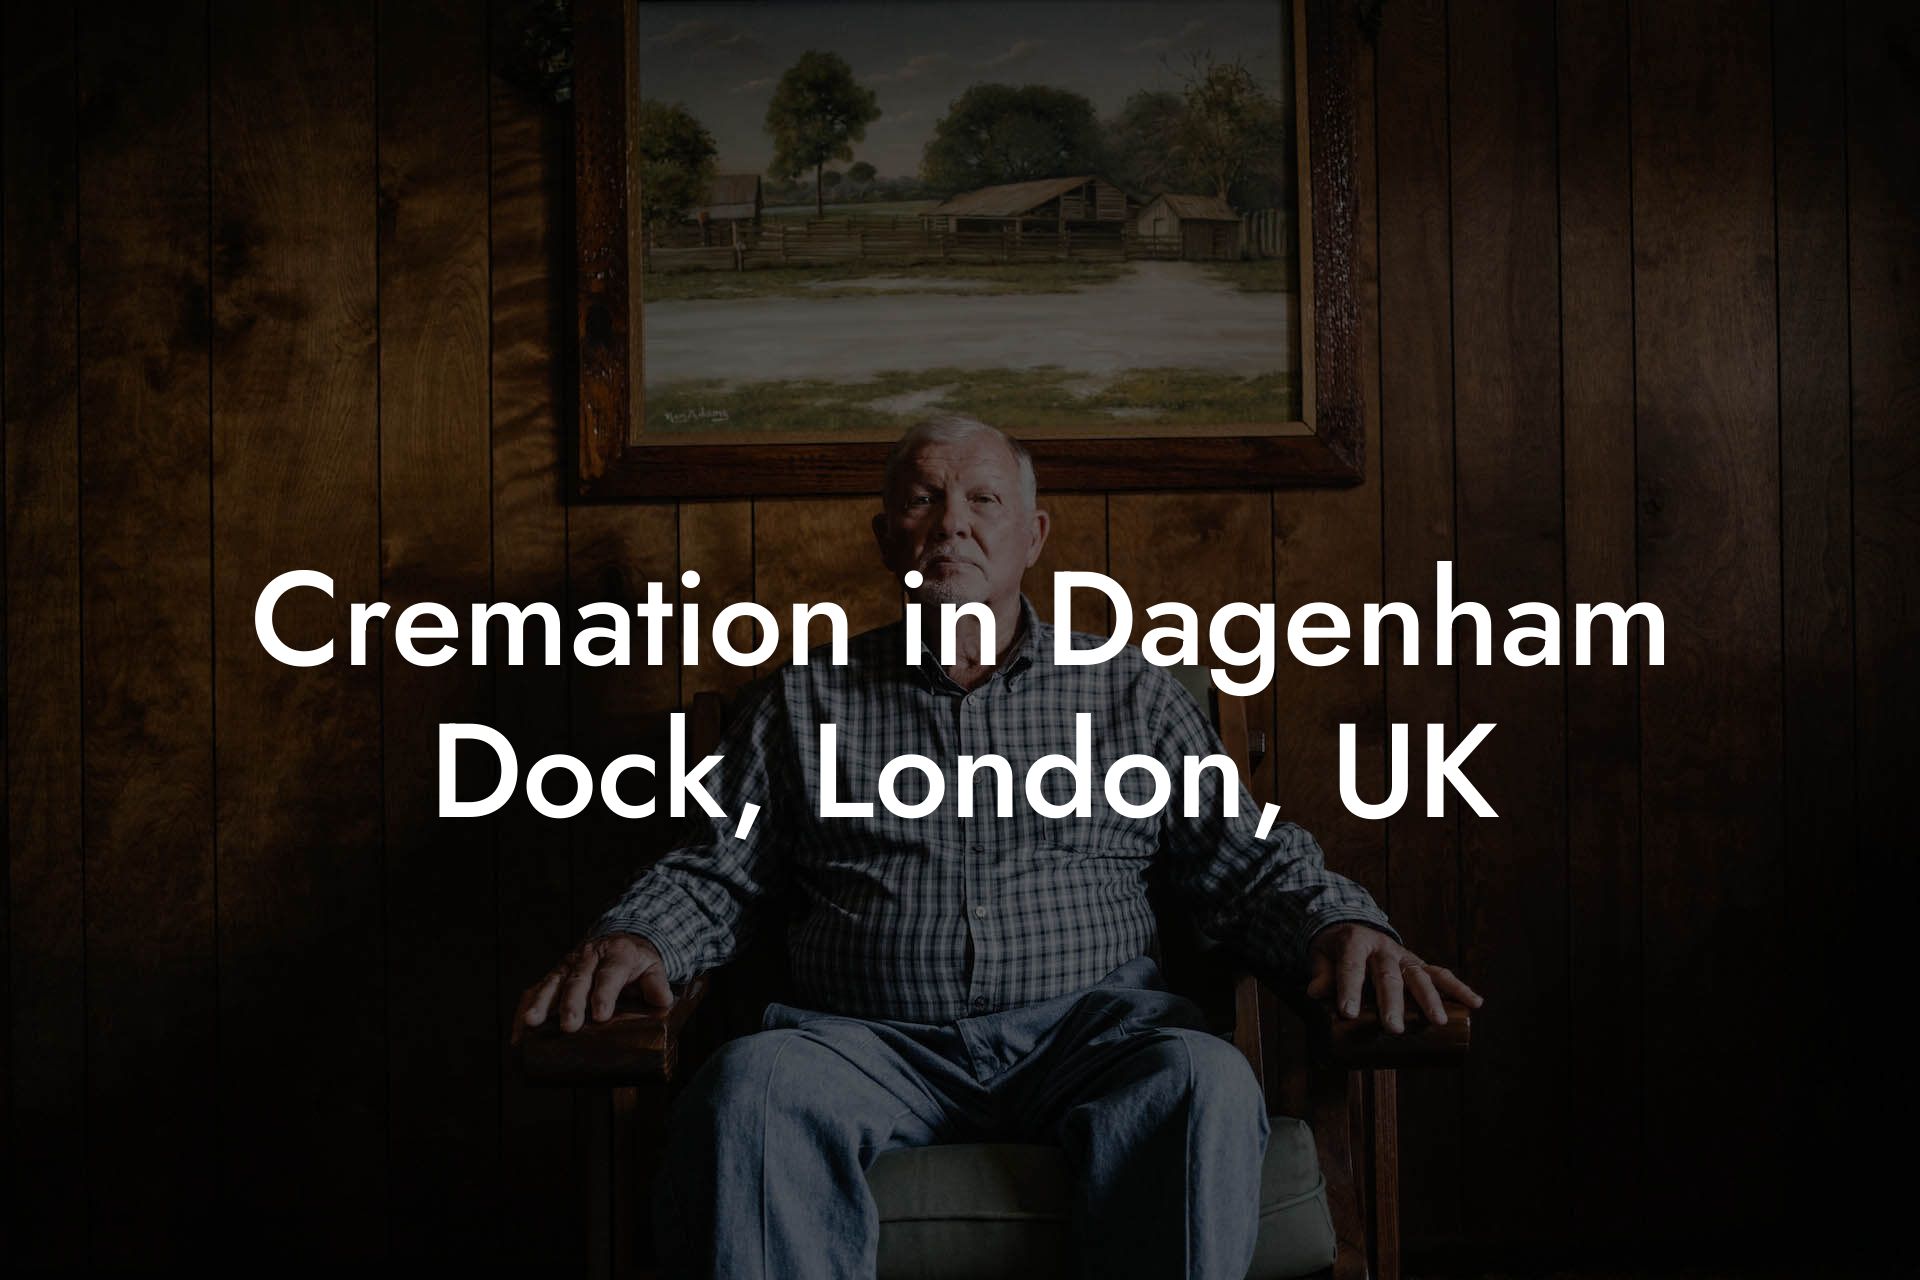 Cremation in Dagenham Dock, London, UK